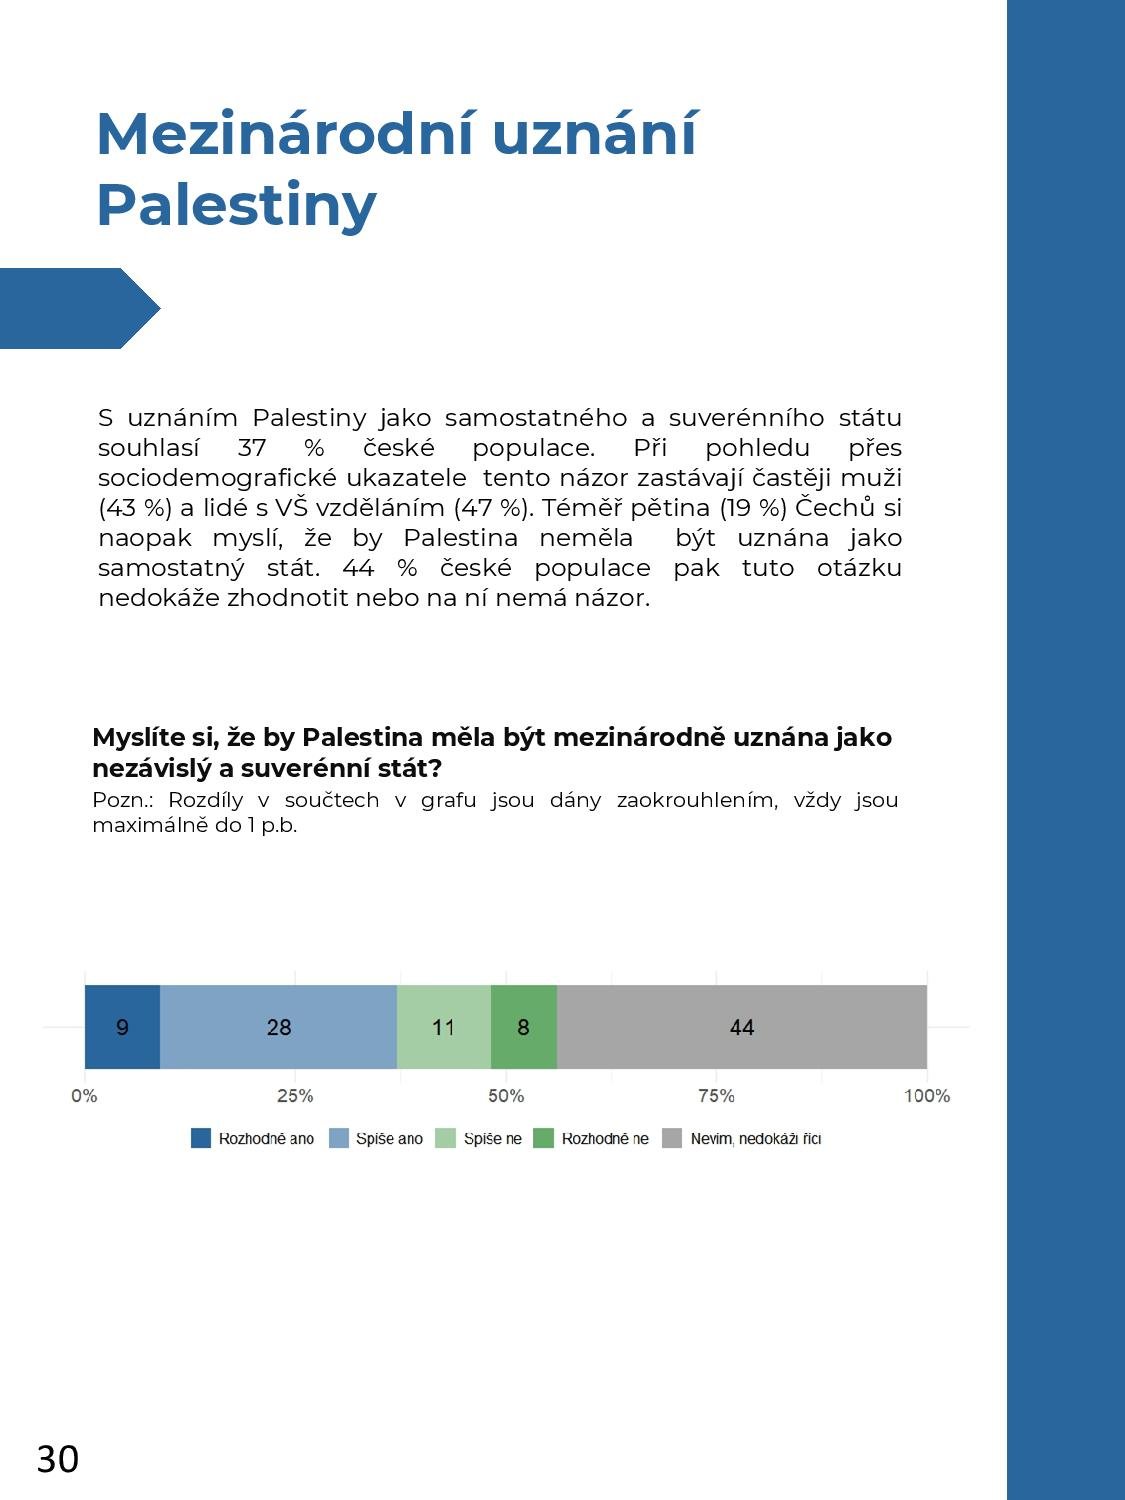 HCIS_PRCP_Public attitudes towards Israel_REPORT_CZ_Finální (2)-page-030.jpg